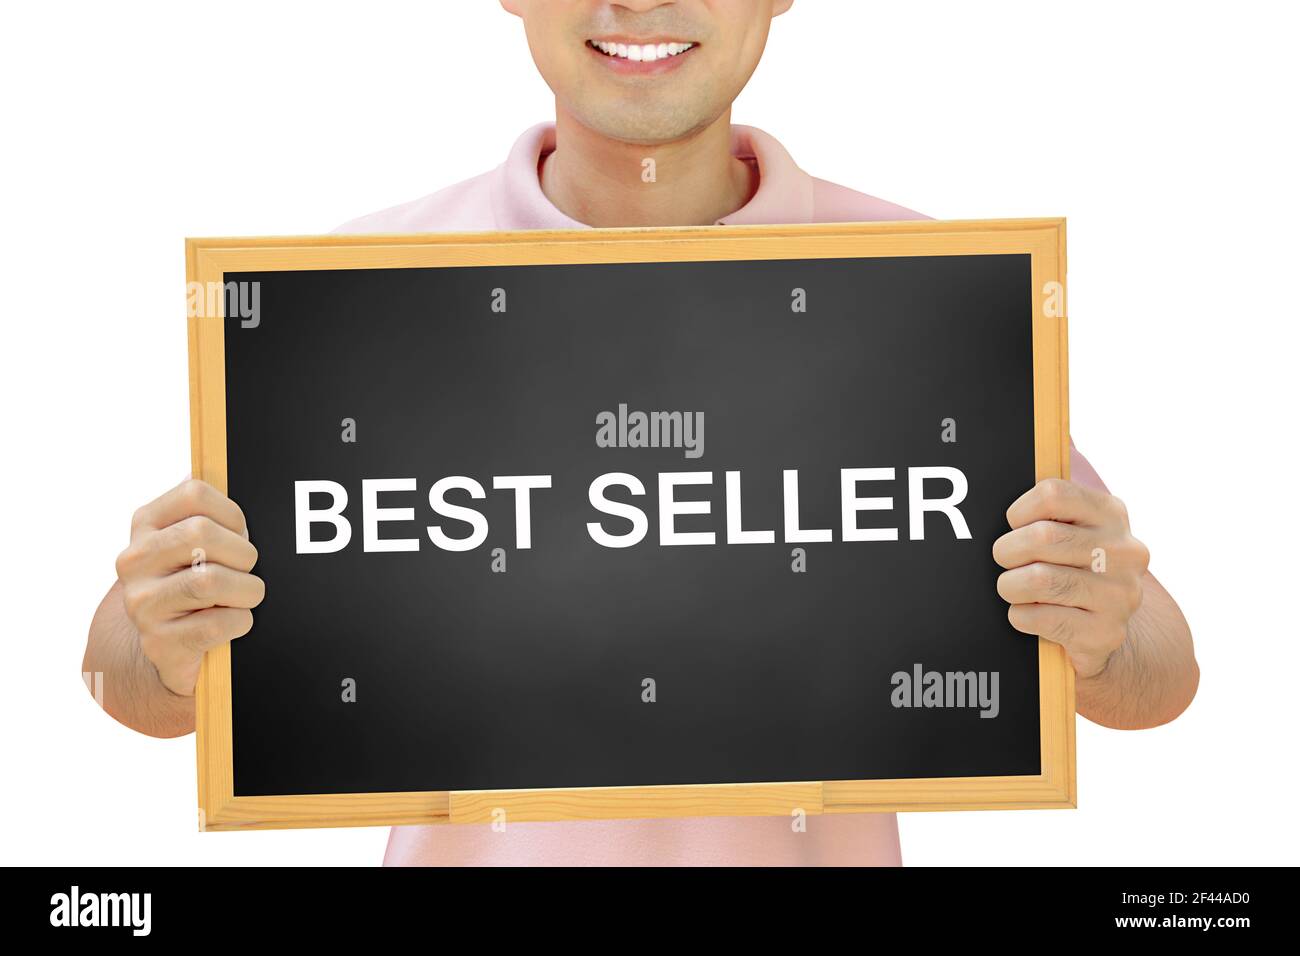 BEST SELLER sign on blackboard held by smiling man Stock Photo